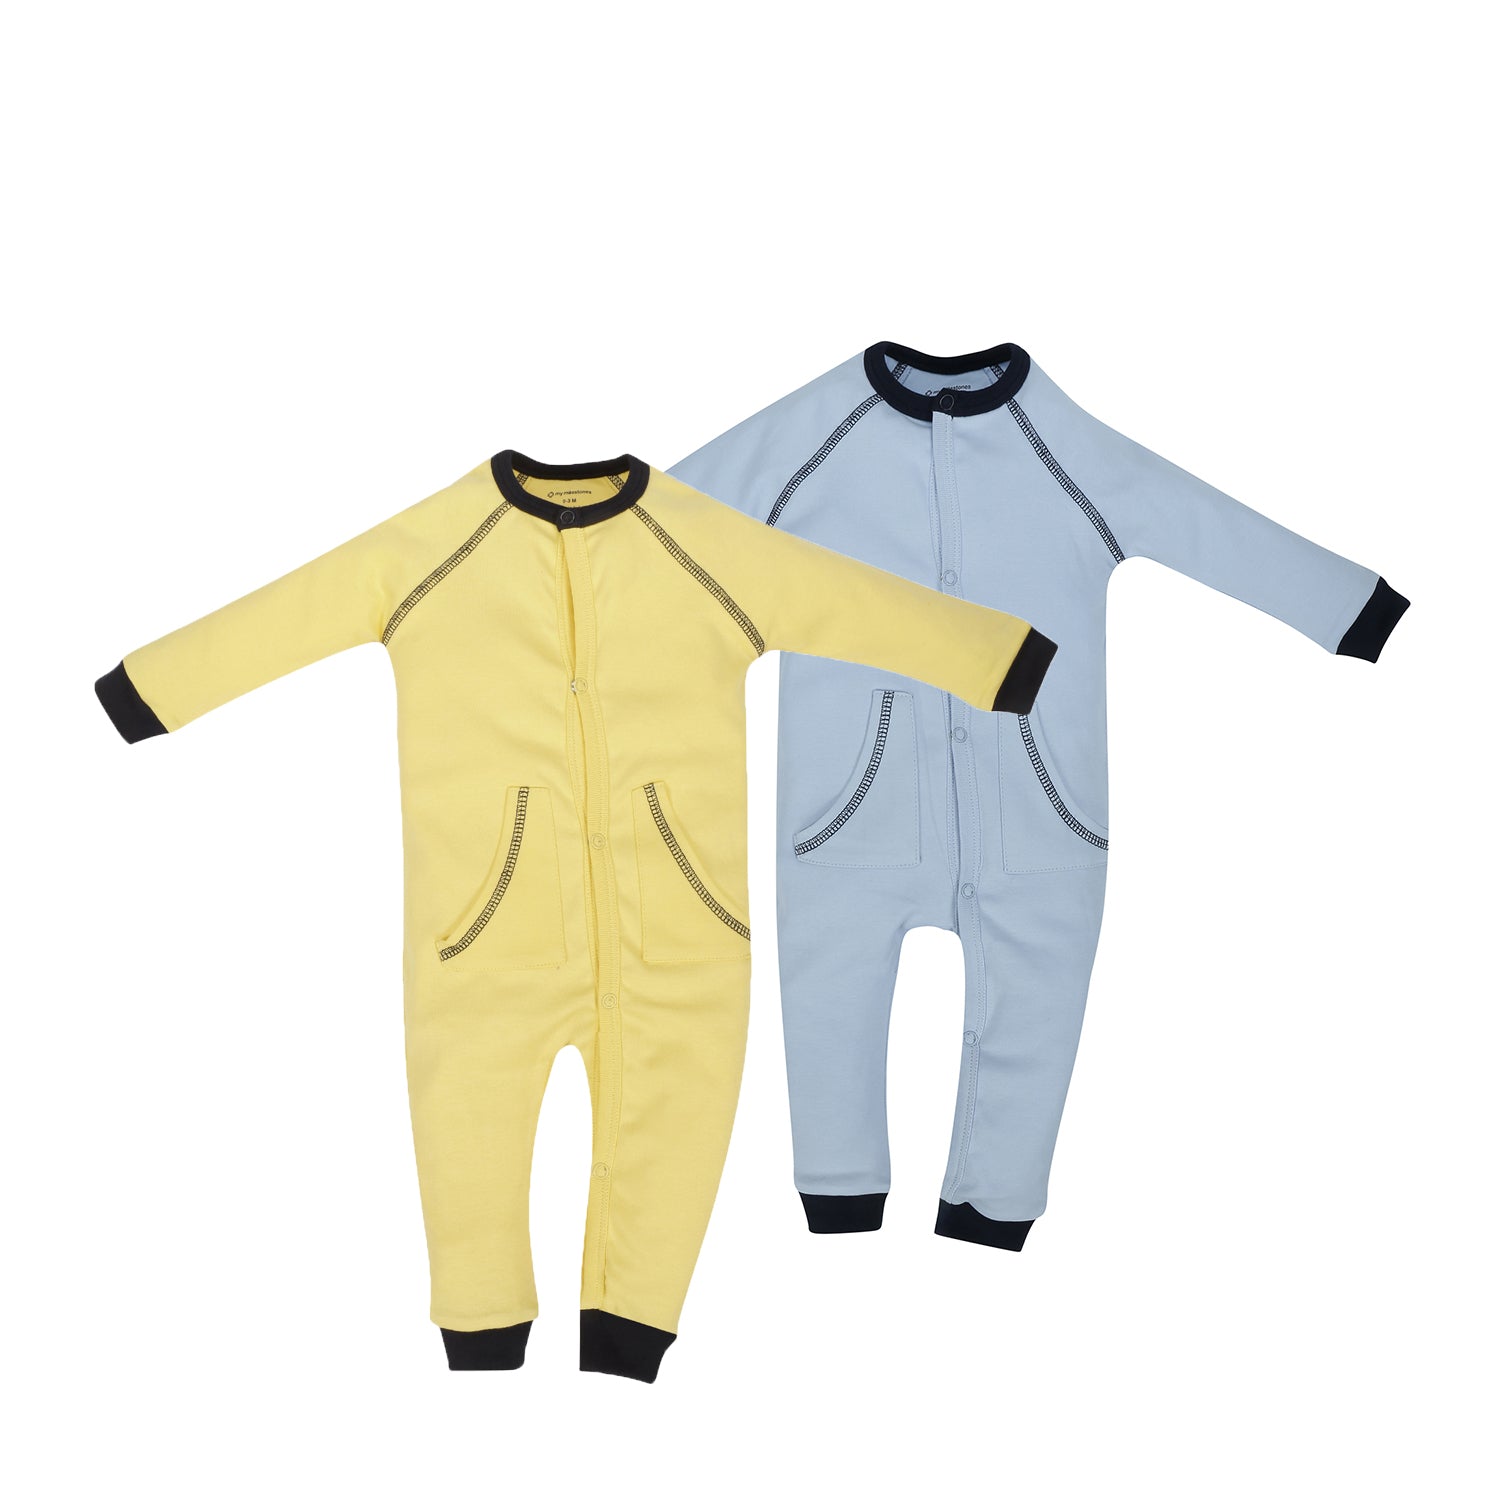 My Milestones Romper Full Sleeves Yellow / Baby Blue - 2 Pc Pack